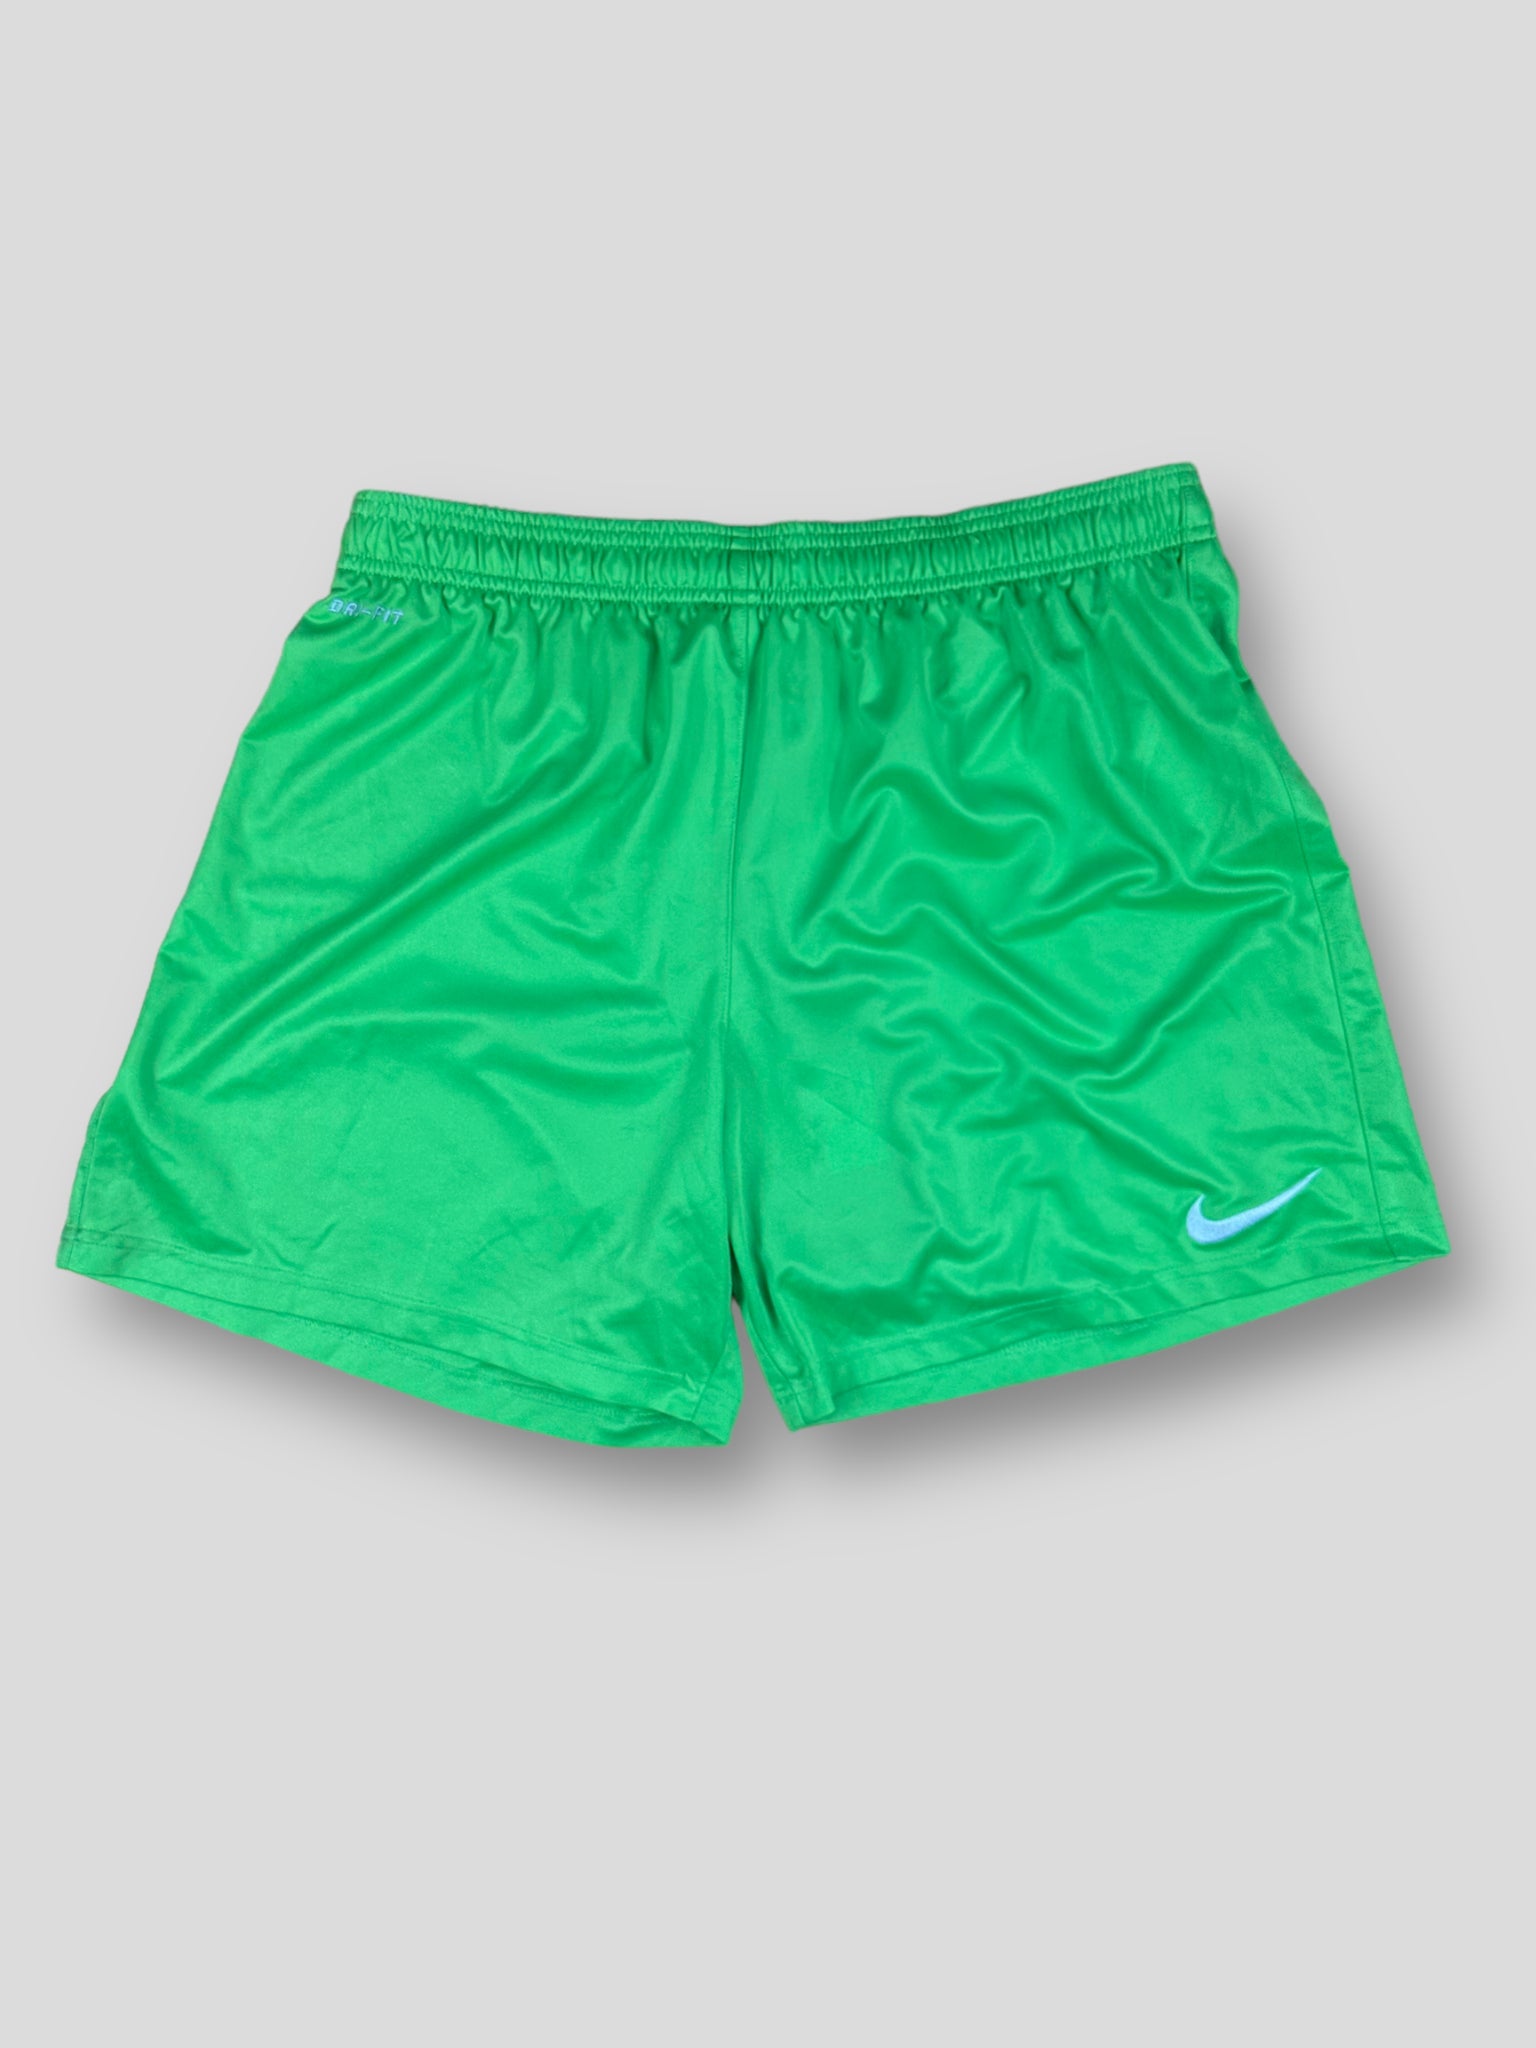 Nike Neon Shorts